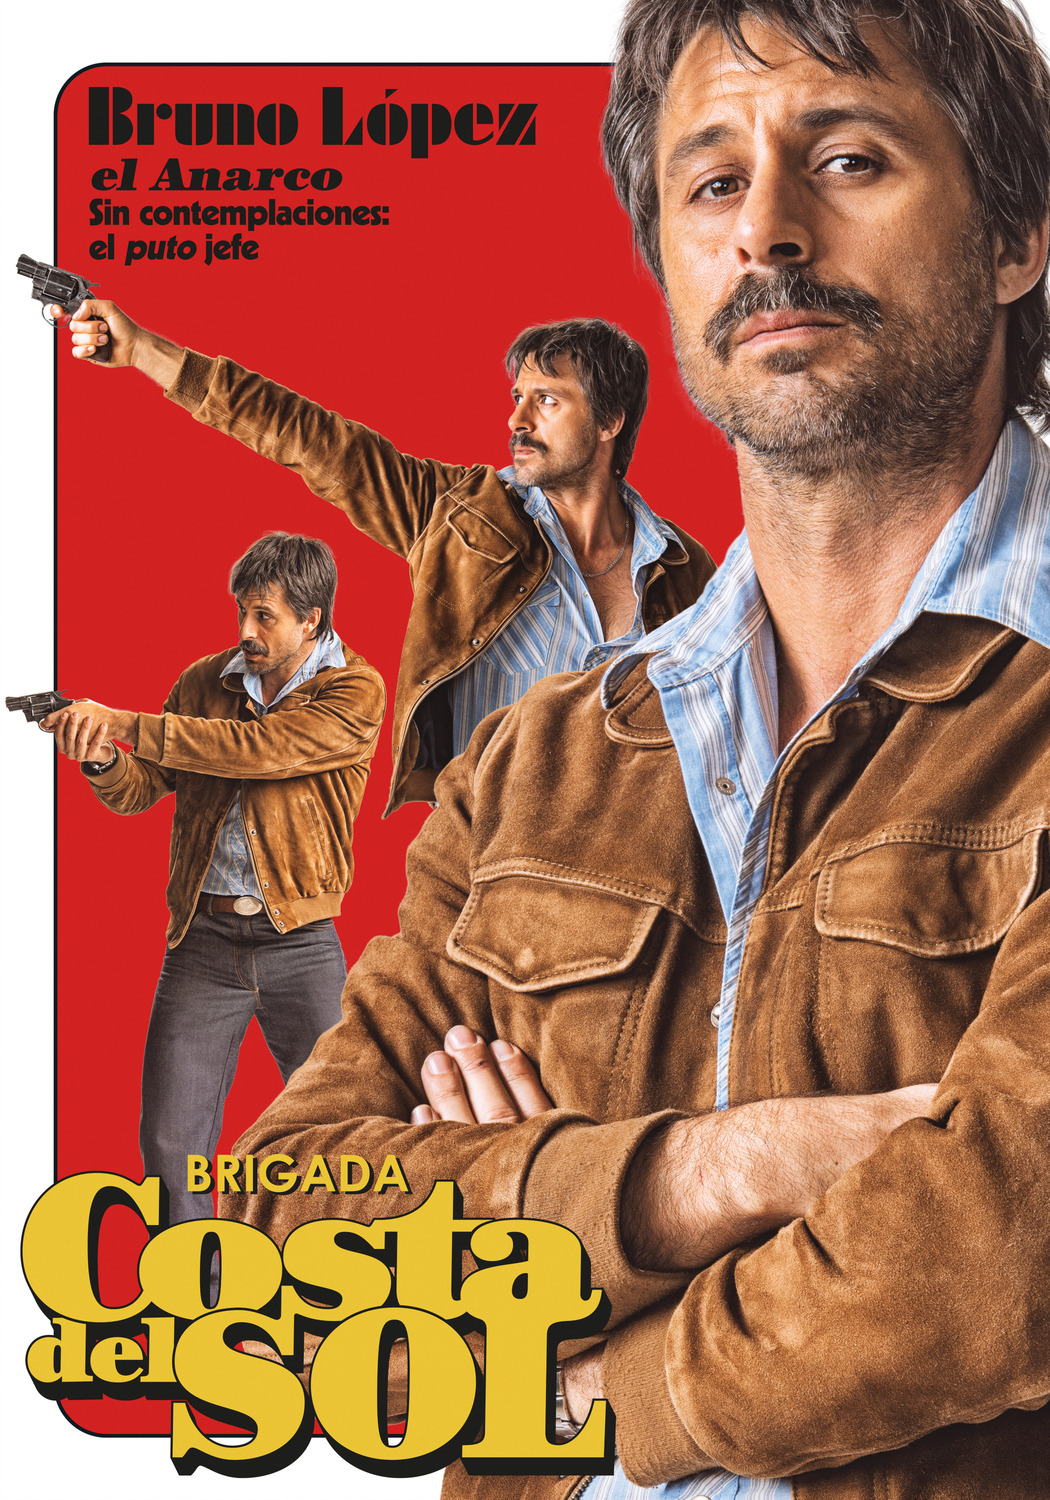 Extra Large TV Poster Image for Brigada Costa del Sol (#4 of 23)